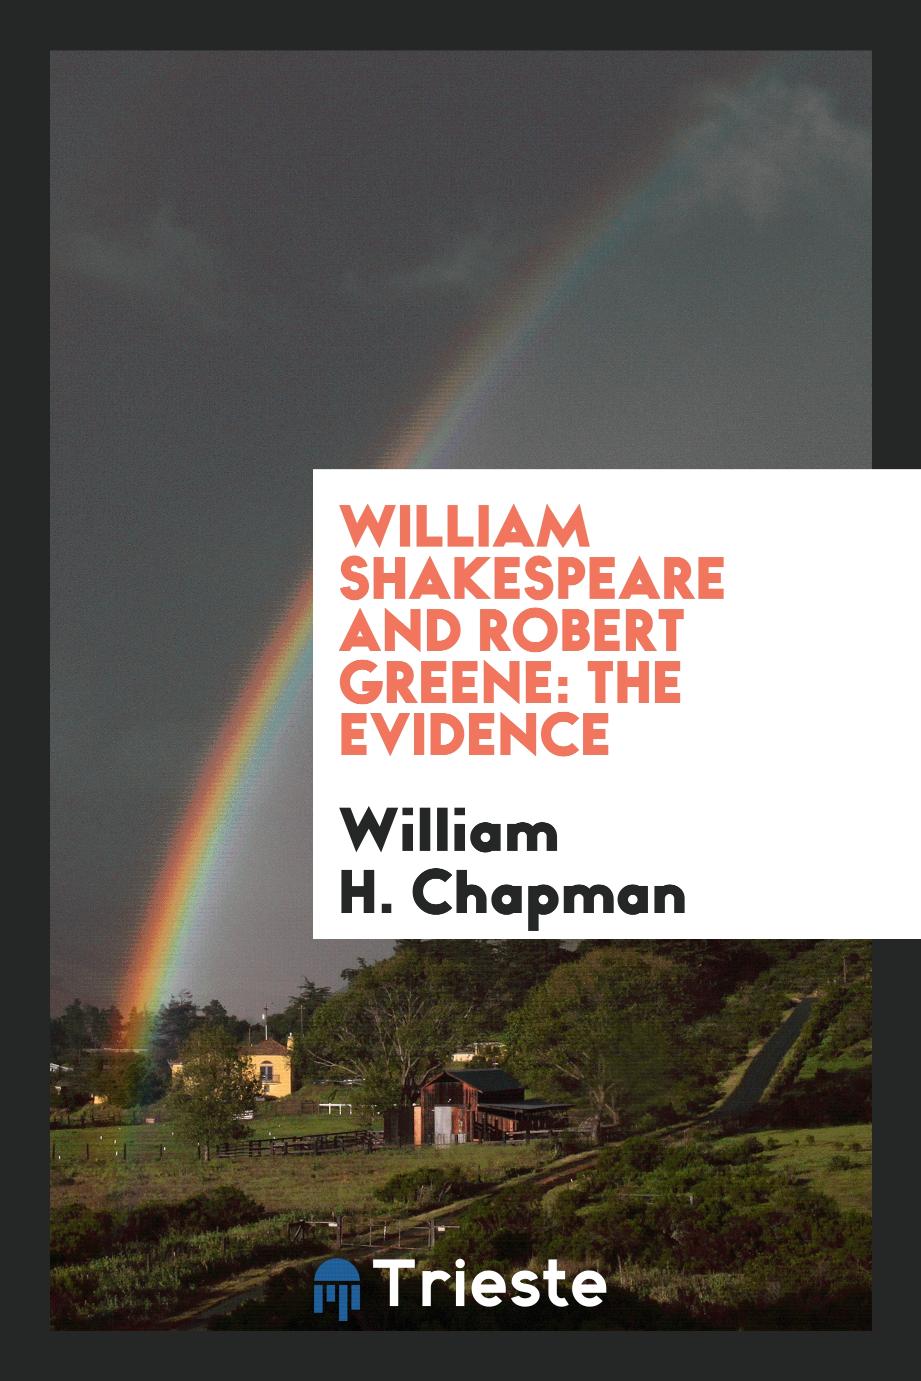 William Shakespeare and Robert Greene: the evidence